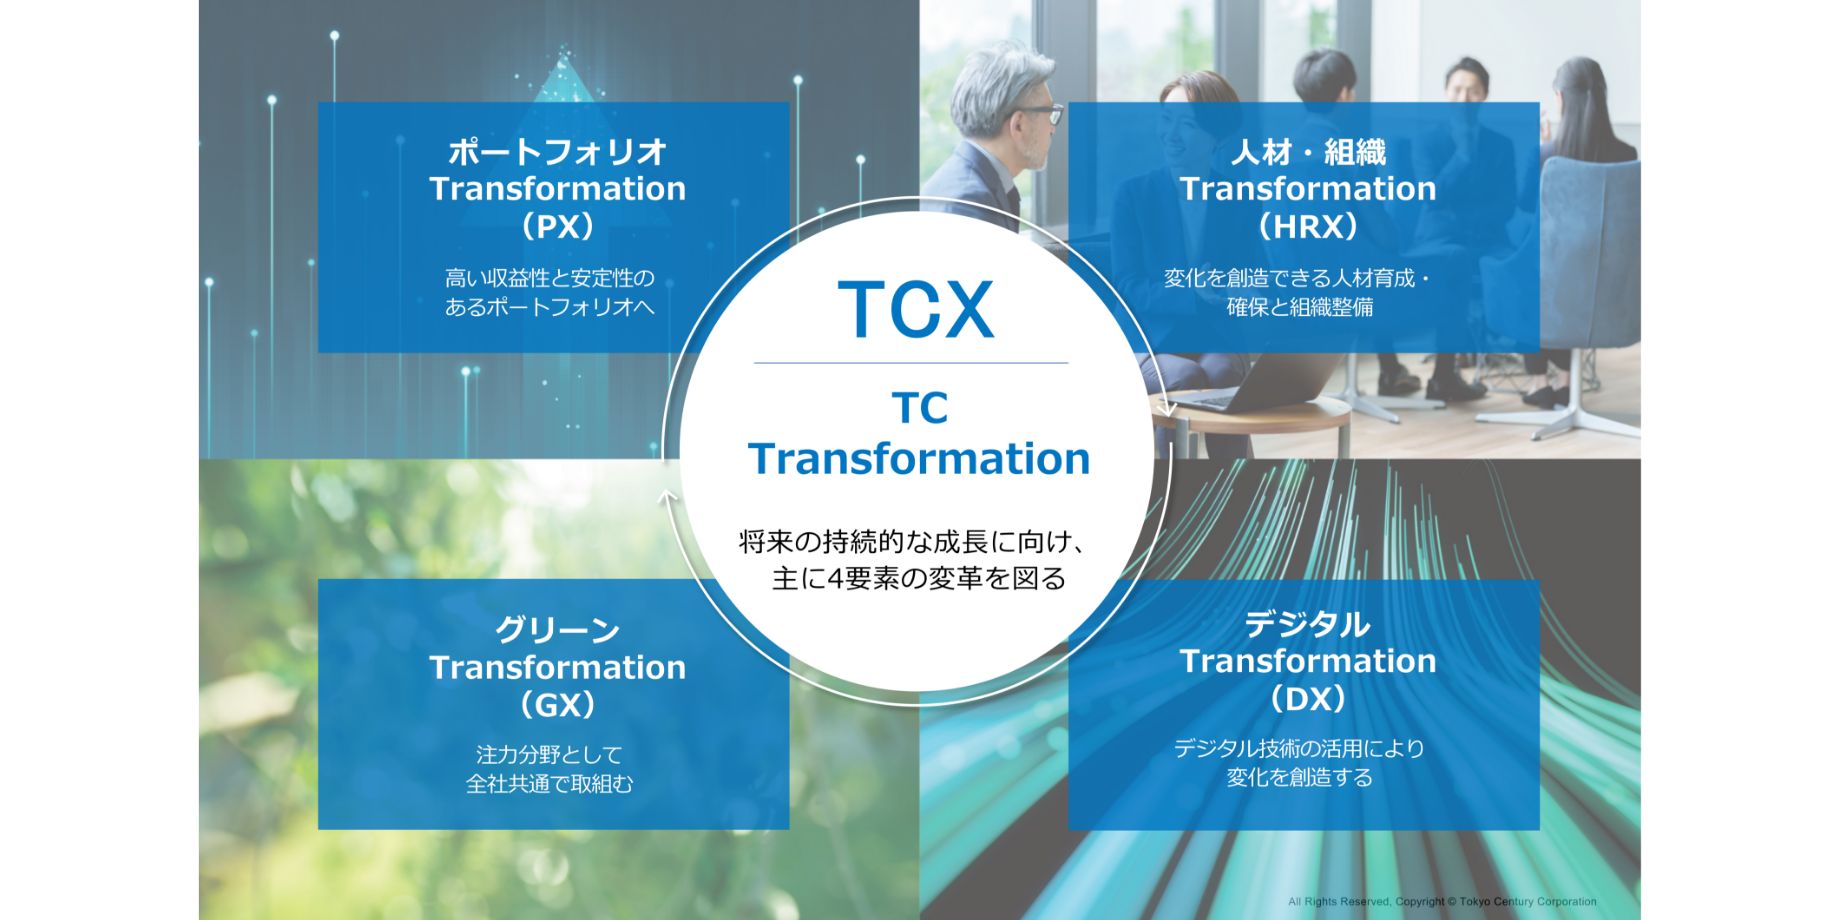 HRX：TCXの4要素のうちの1つ。変化を想像できる人材育成・確保と組織の整備のこと